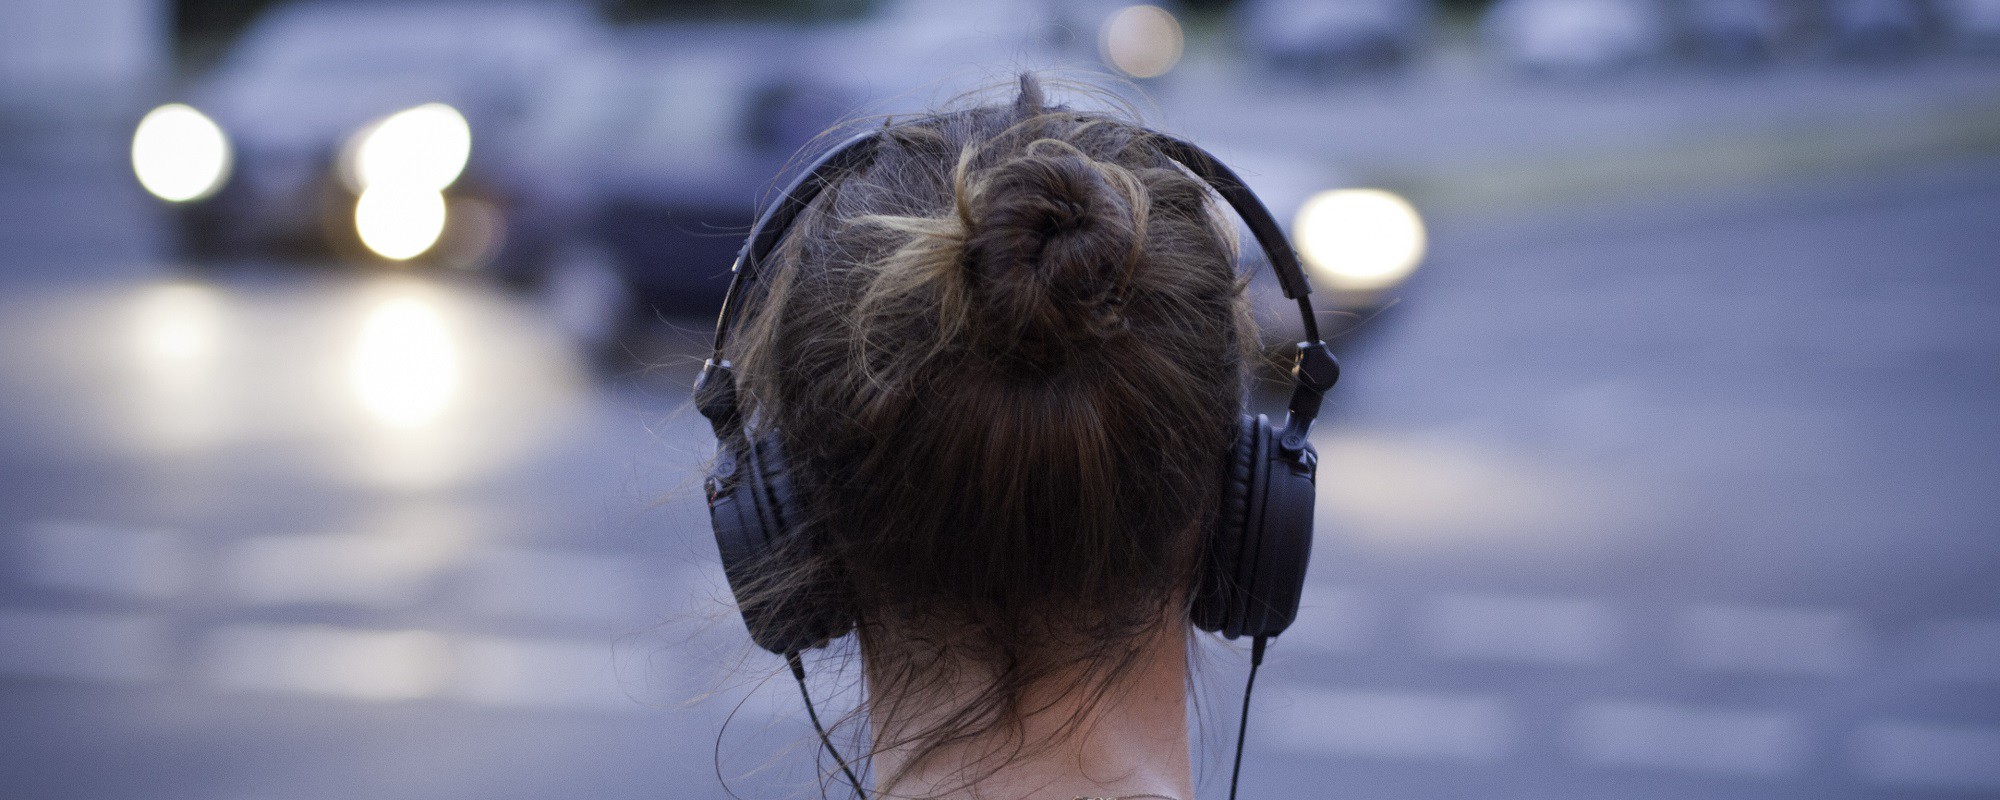 A woman wearing over-ear headphones walks down a street.